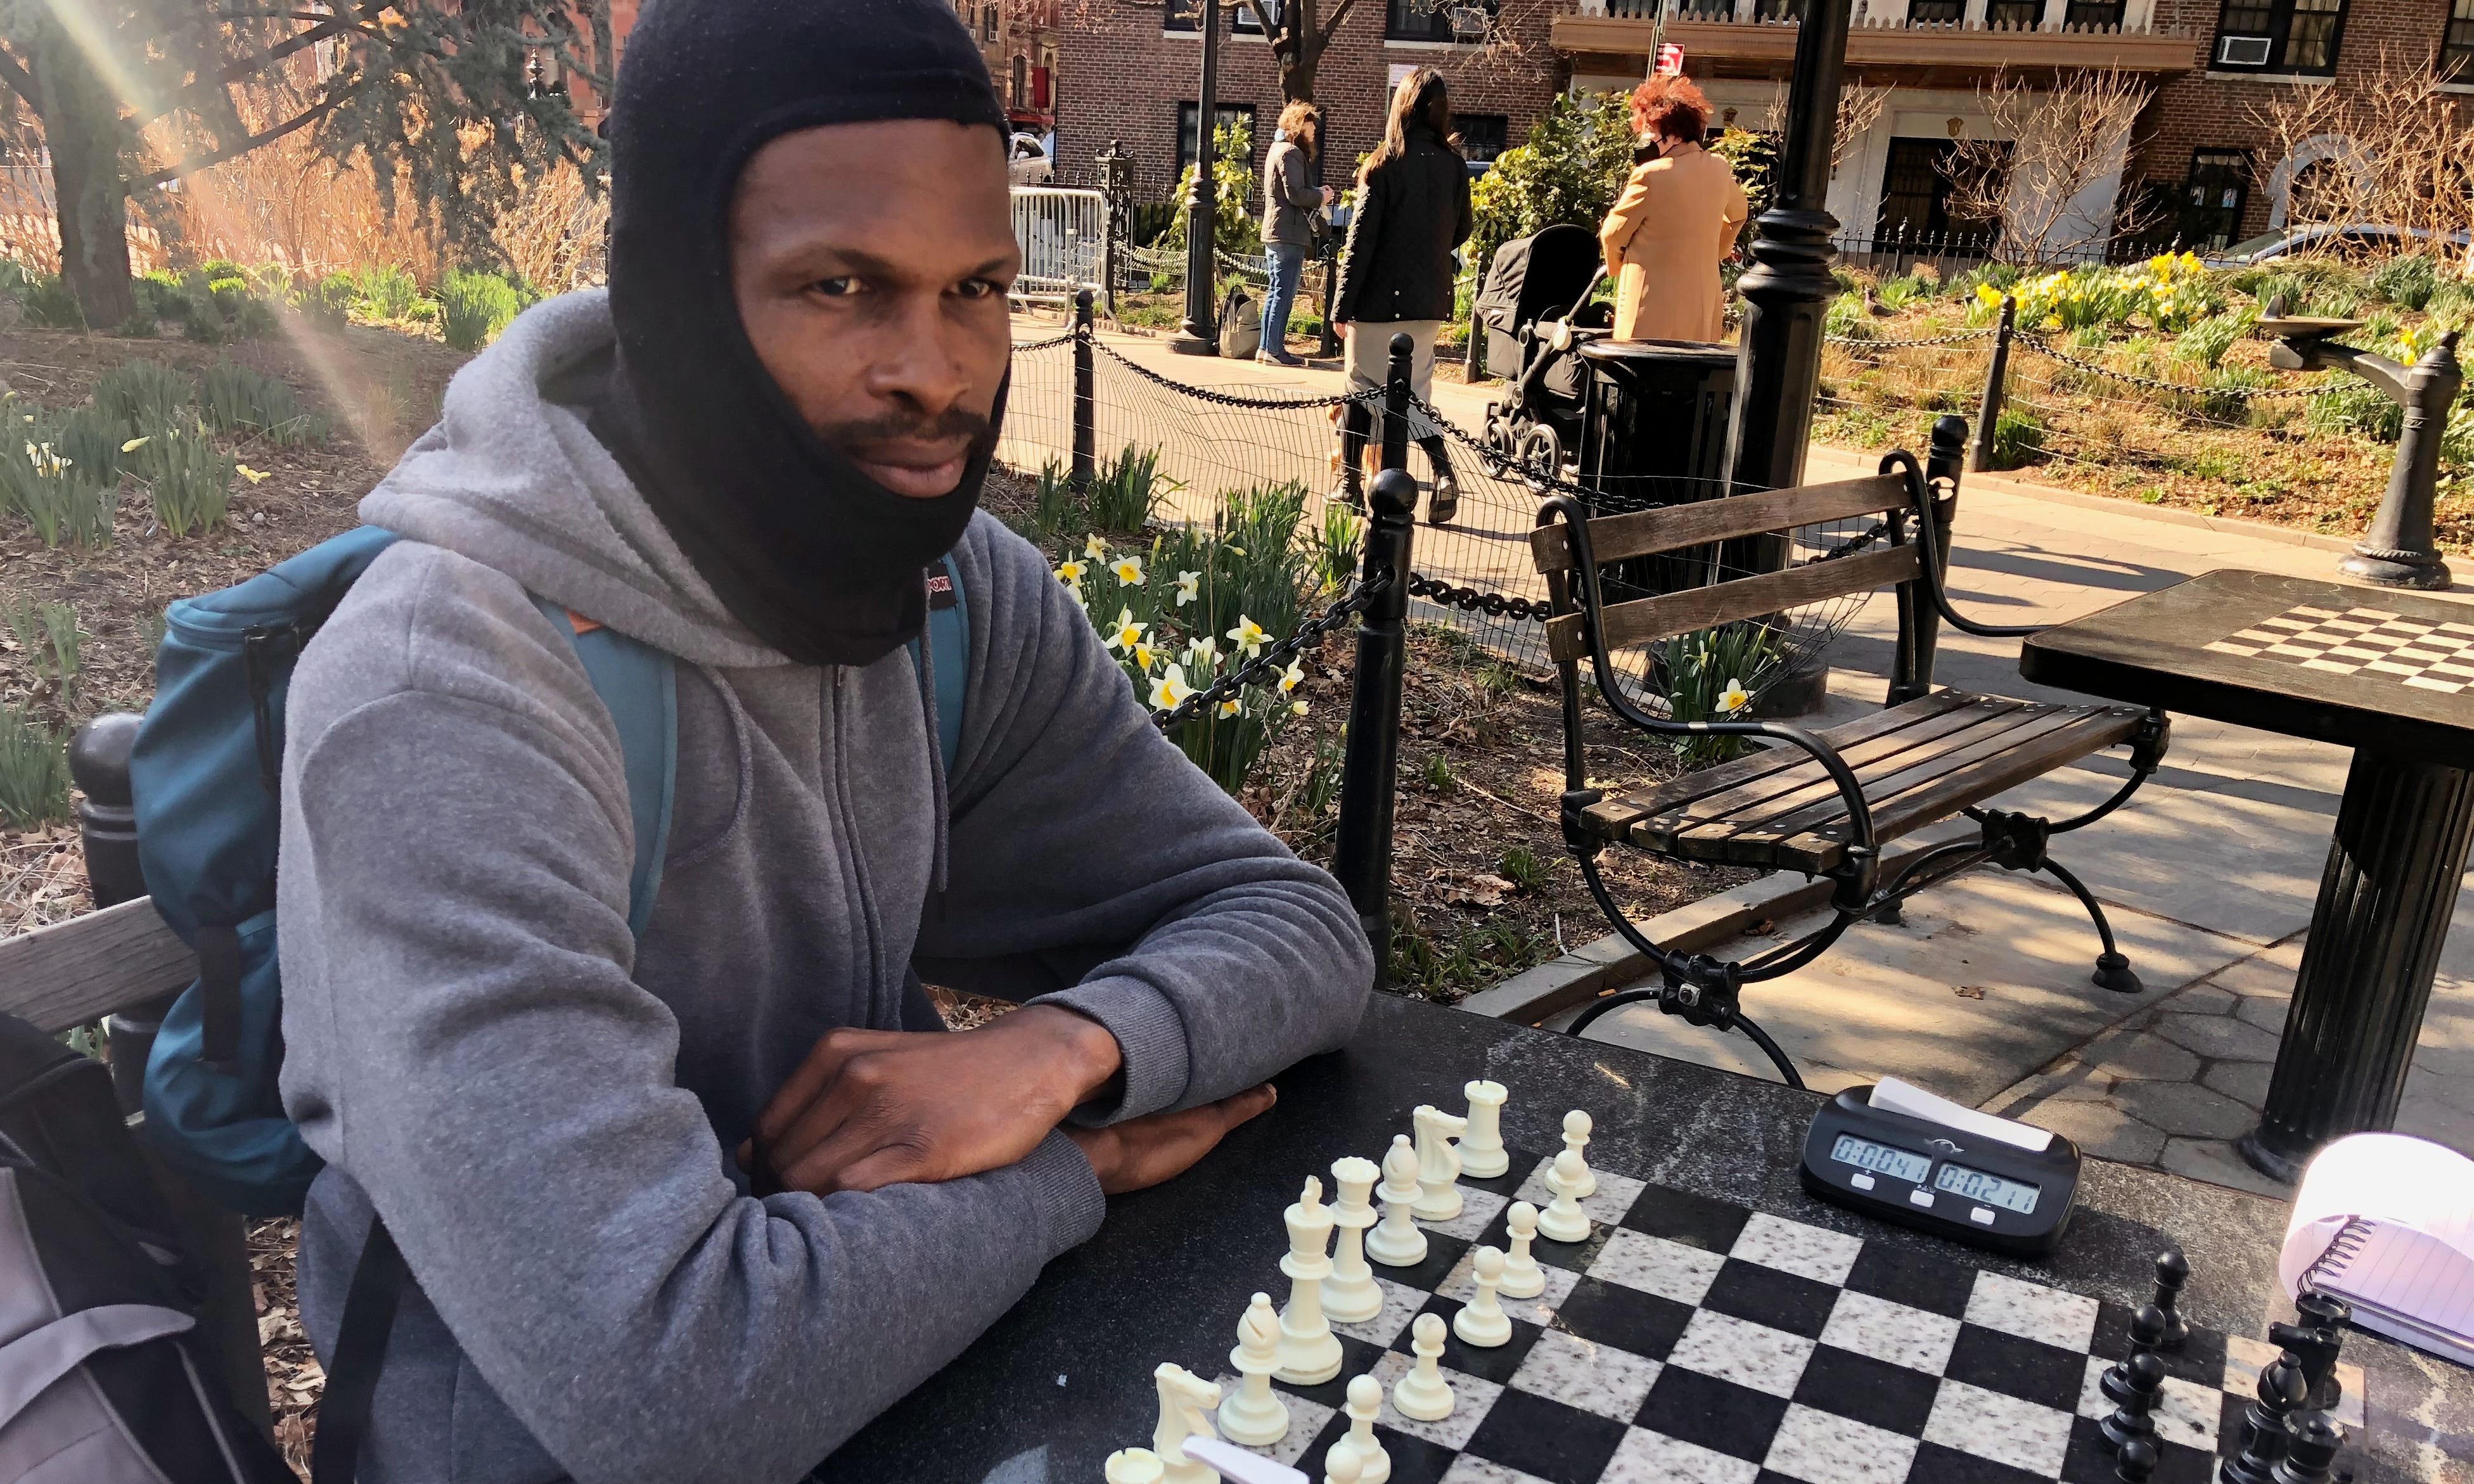 NYC park chess players still making moves despite coronavirus